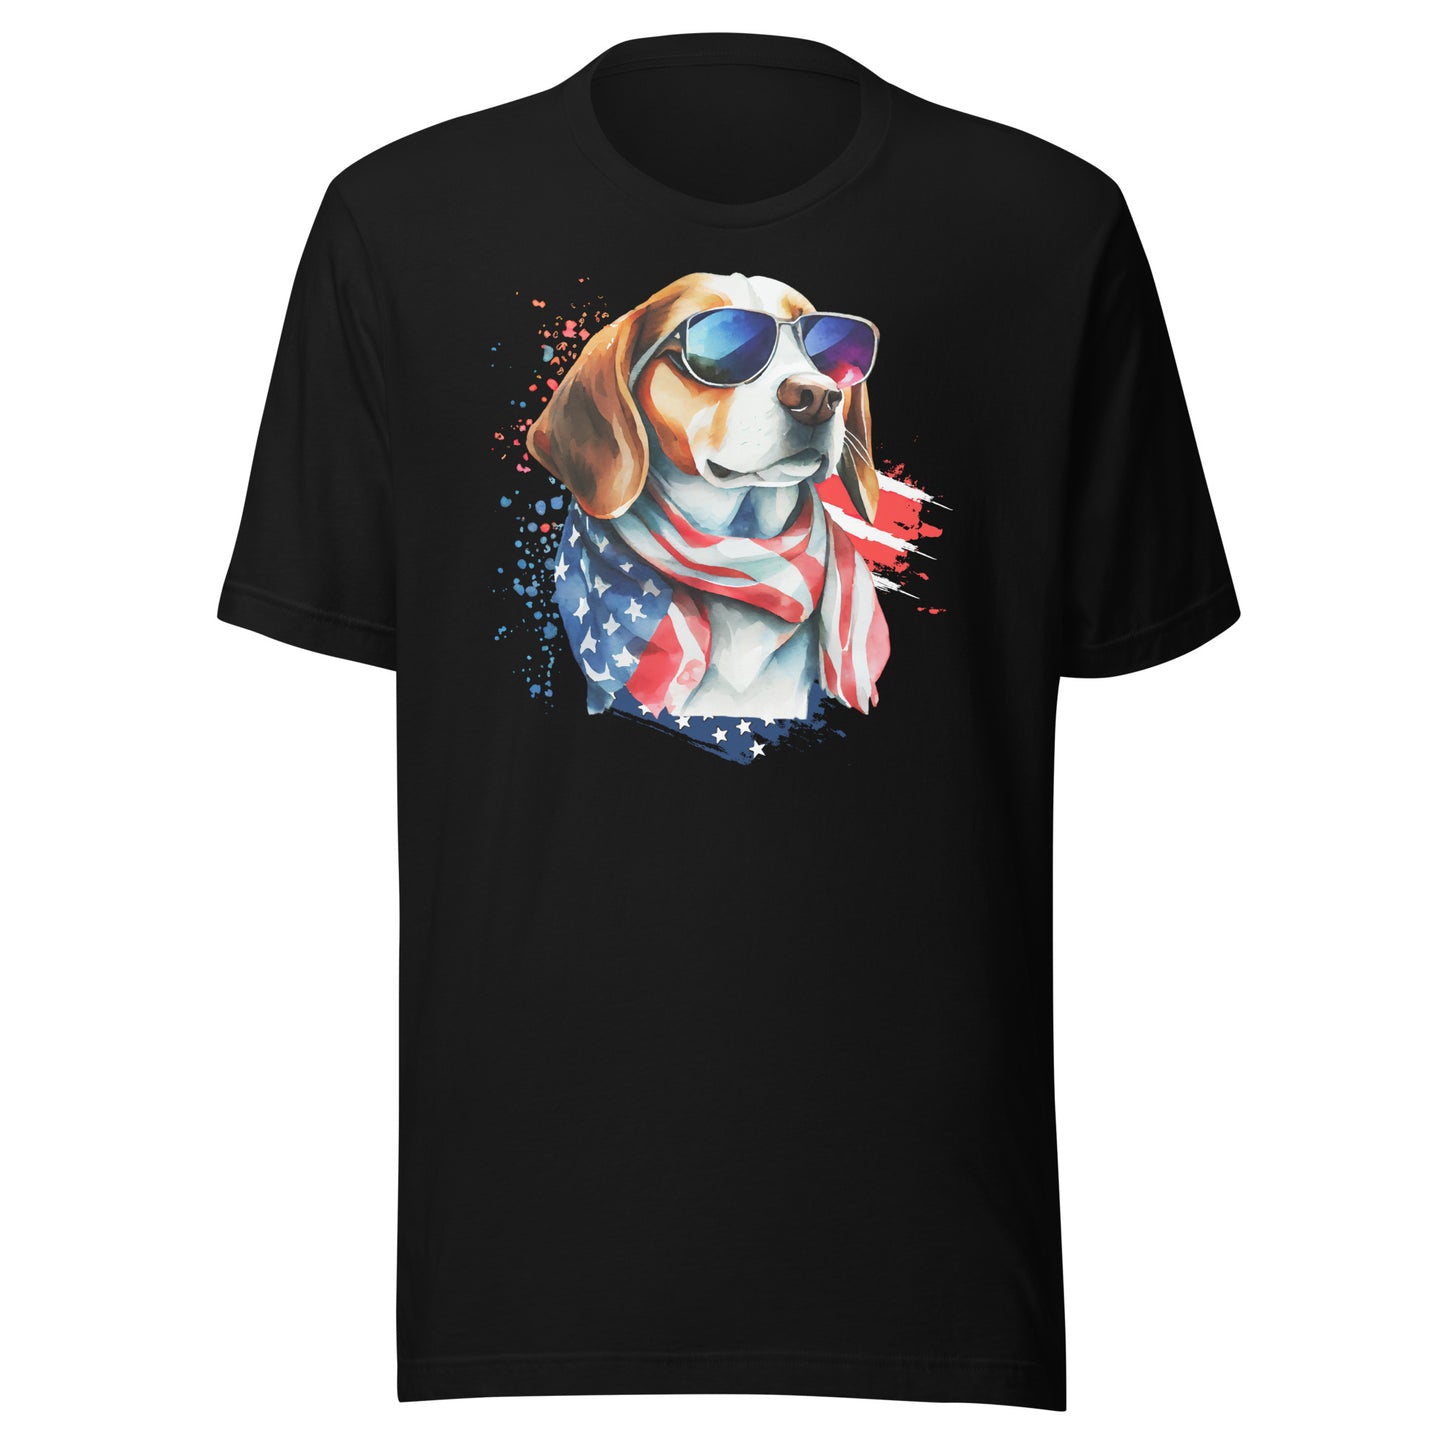 US Patriotic Dog Shirt For Beagle lover XS - 5XL Black Color